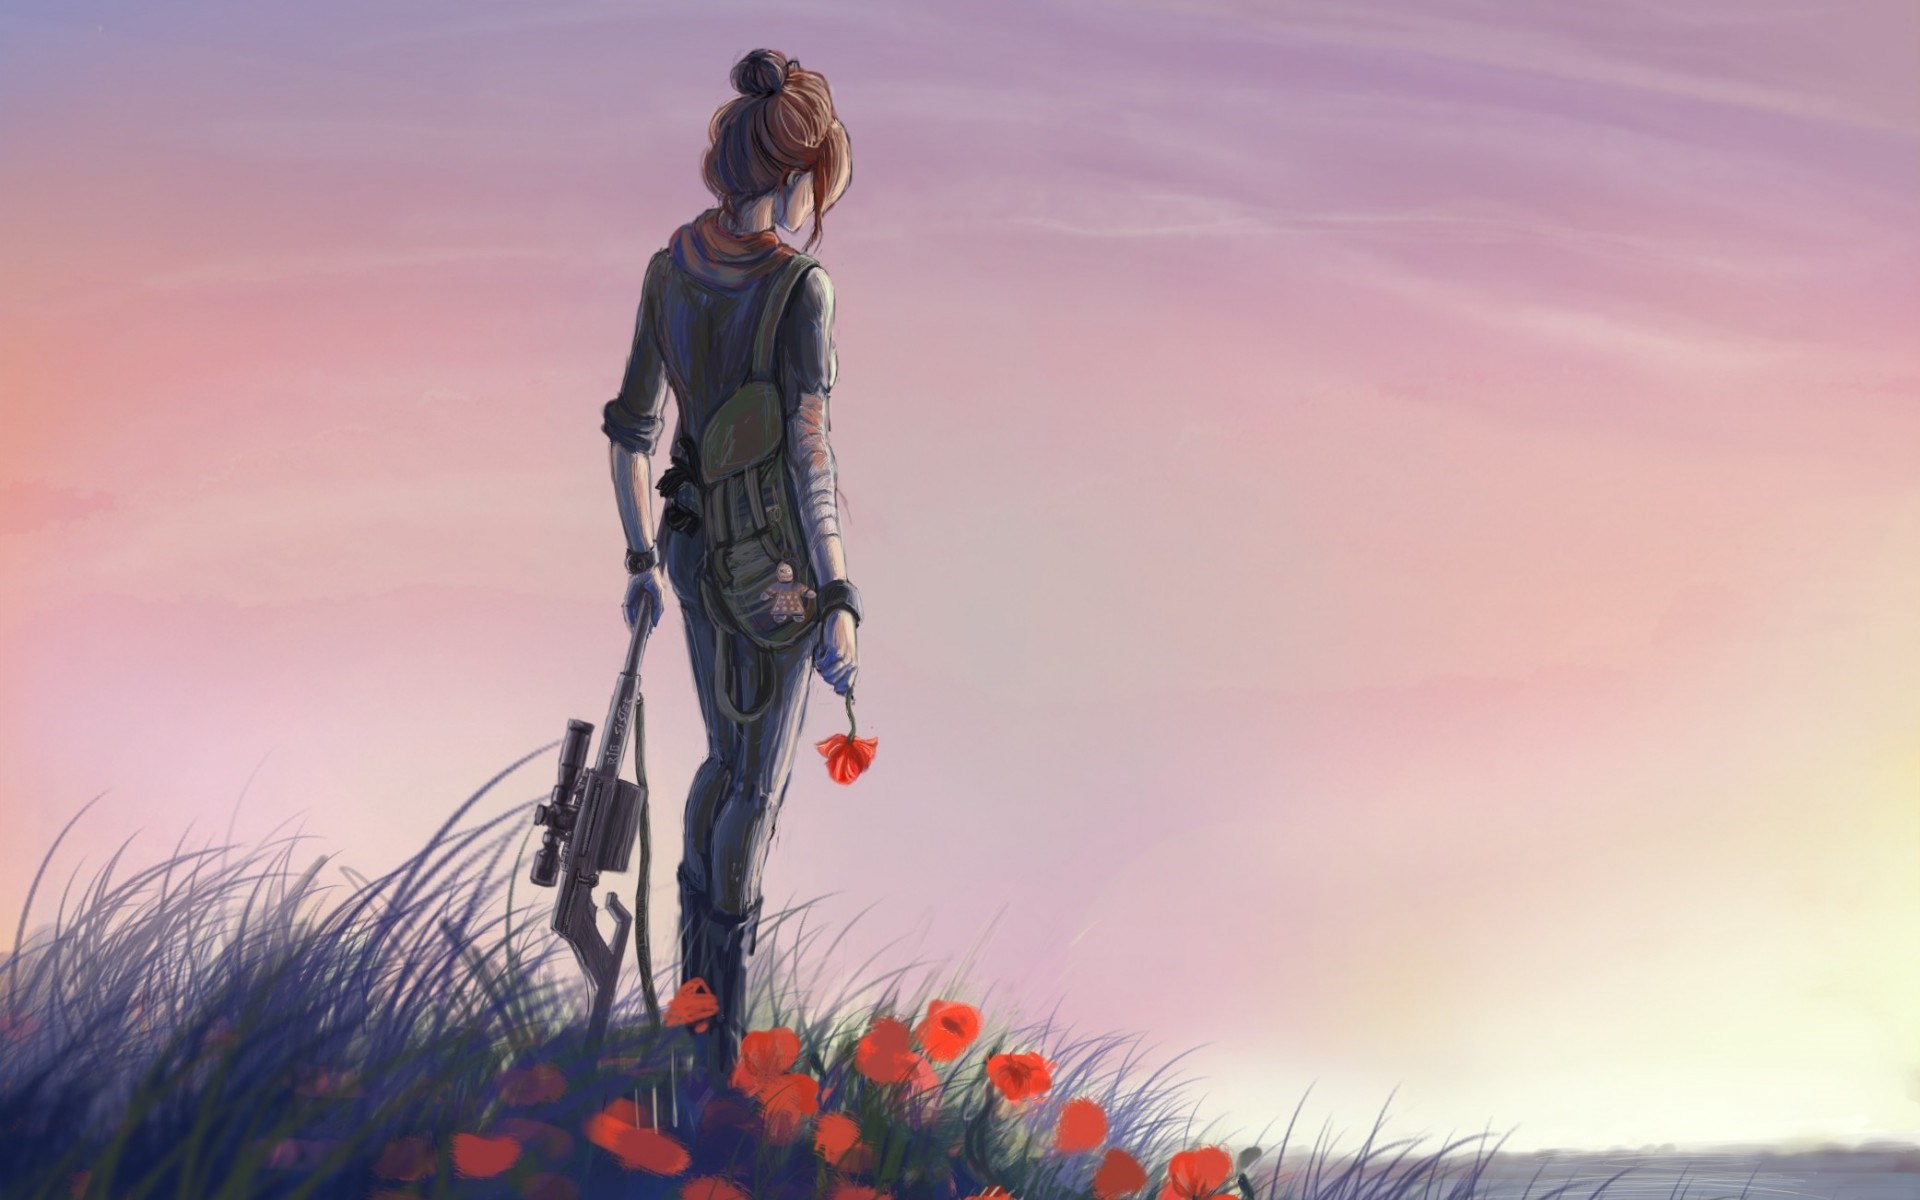 Sniper Girl In Poppies Field Drawing HD Free Wallpaper - Nova ...